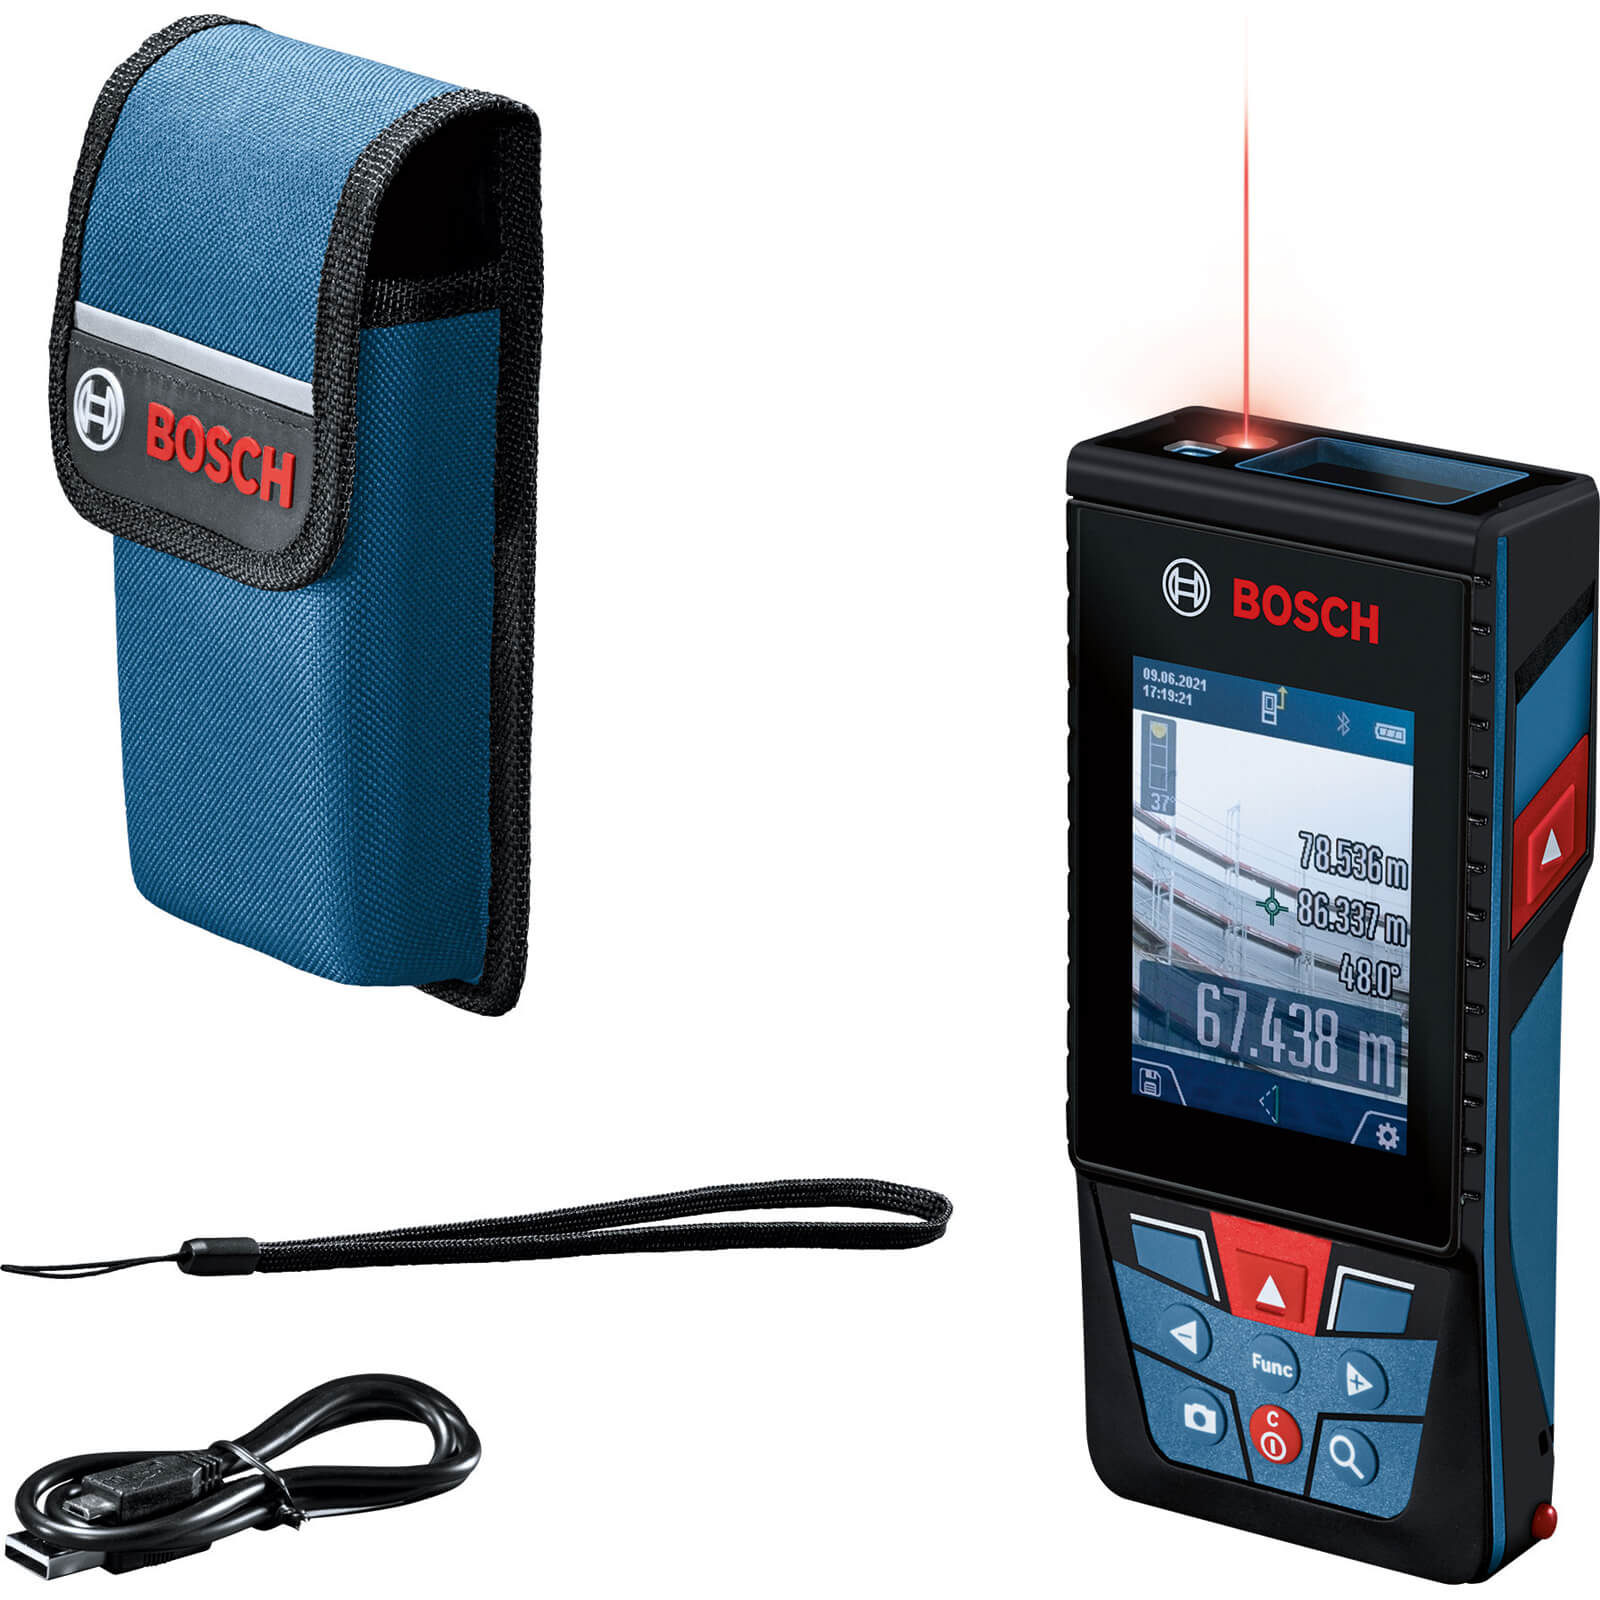 Image of Bosch GLM 150-27 C Professional Laser Measure 150m